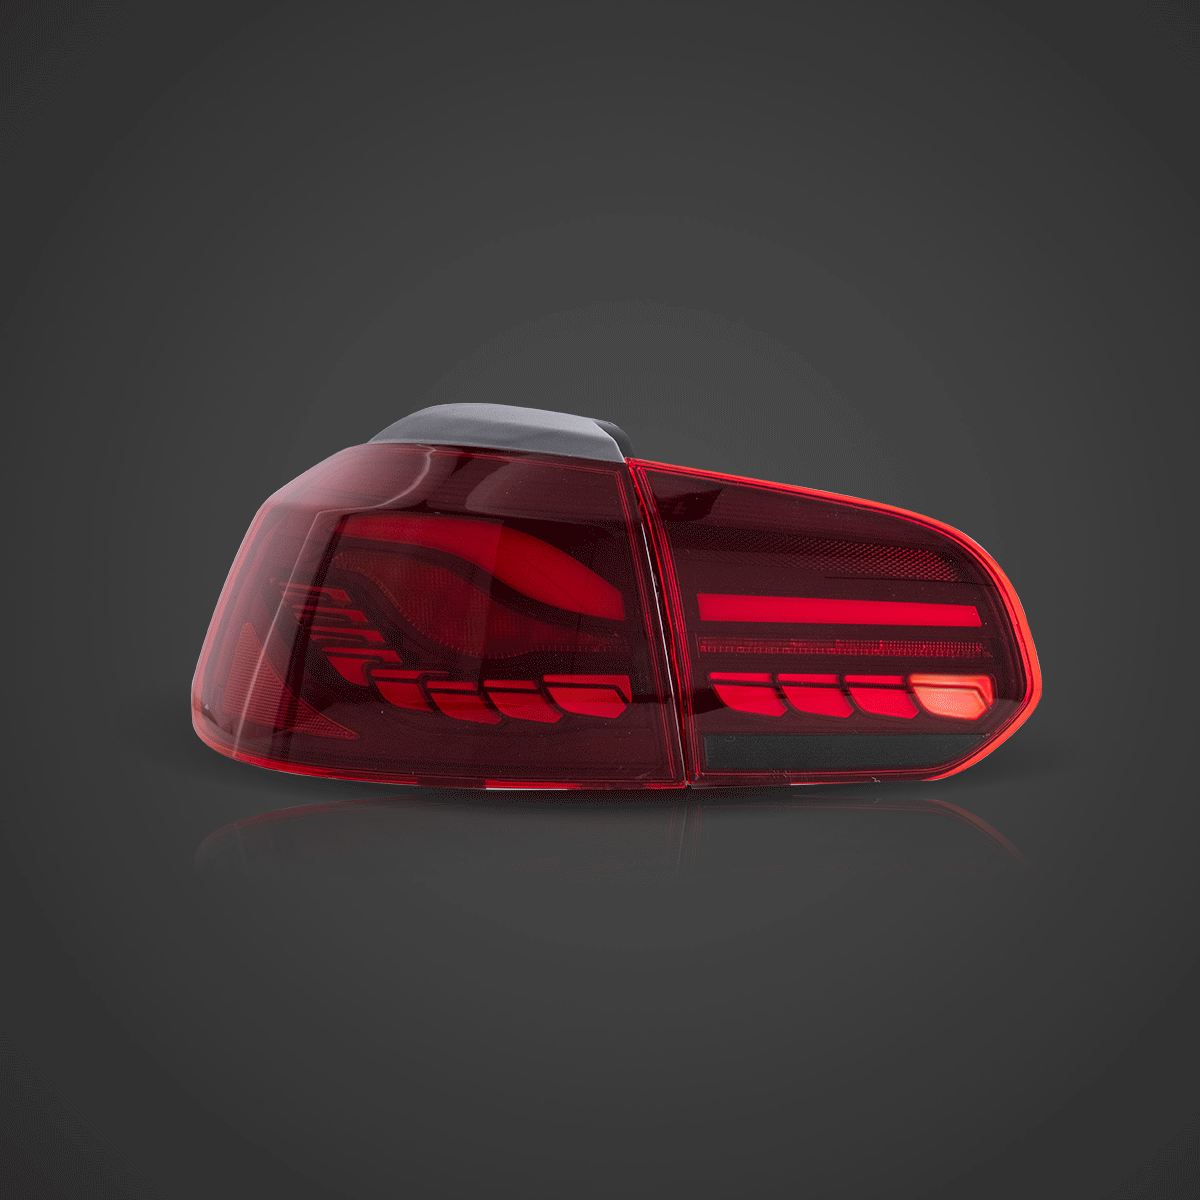 08-14 Volkswagen Golf 6th Gen Mk6 (5K) Hatchback Vland II OLED Tail Lights With Dynamic Welcome Lighting (GTS Style)